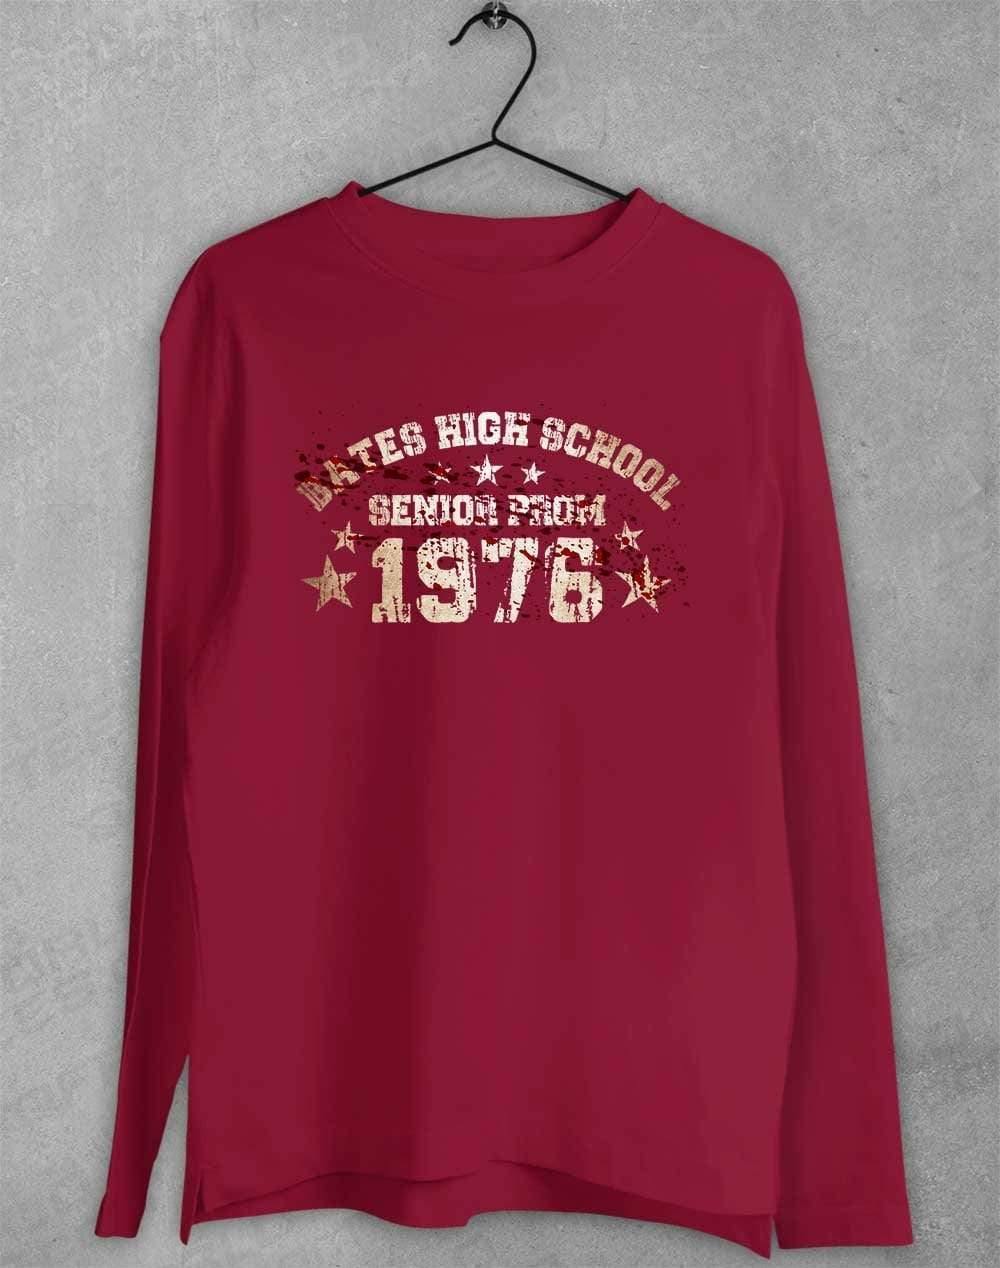 Bates High School Prom 1976 Long Sleeve T-Shirt S / Cardinal  - Off World Tees